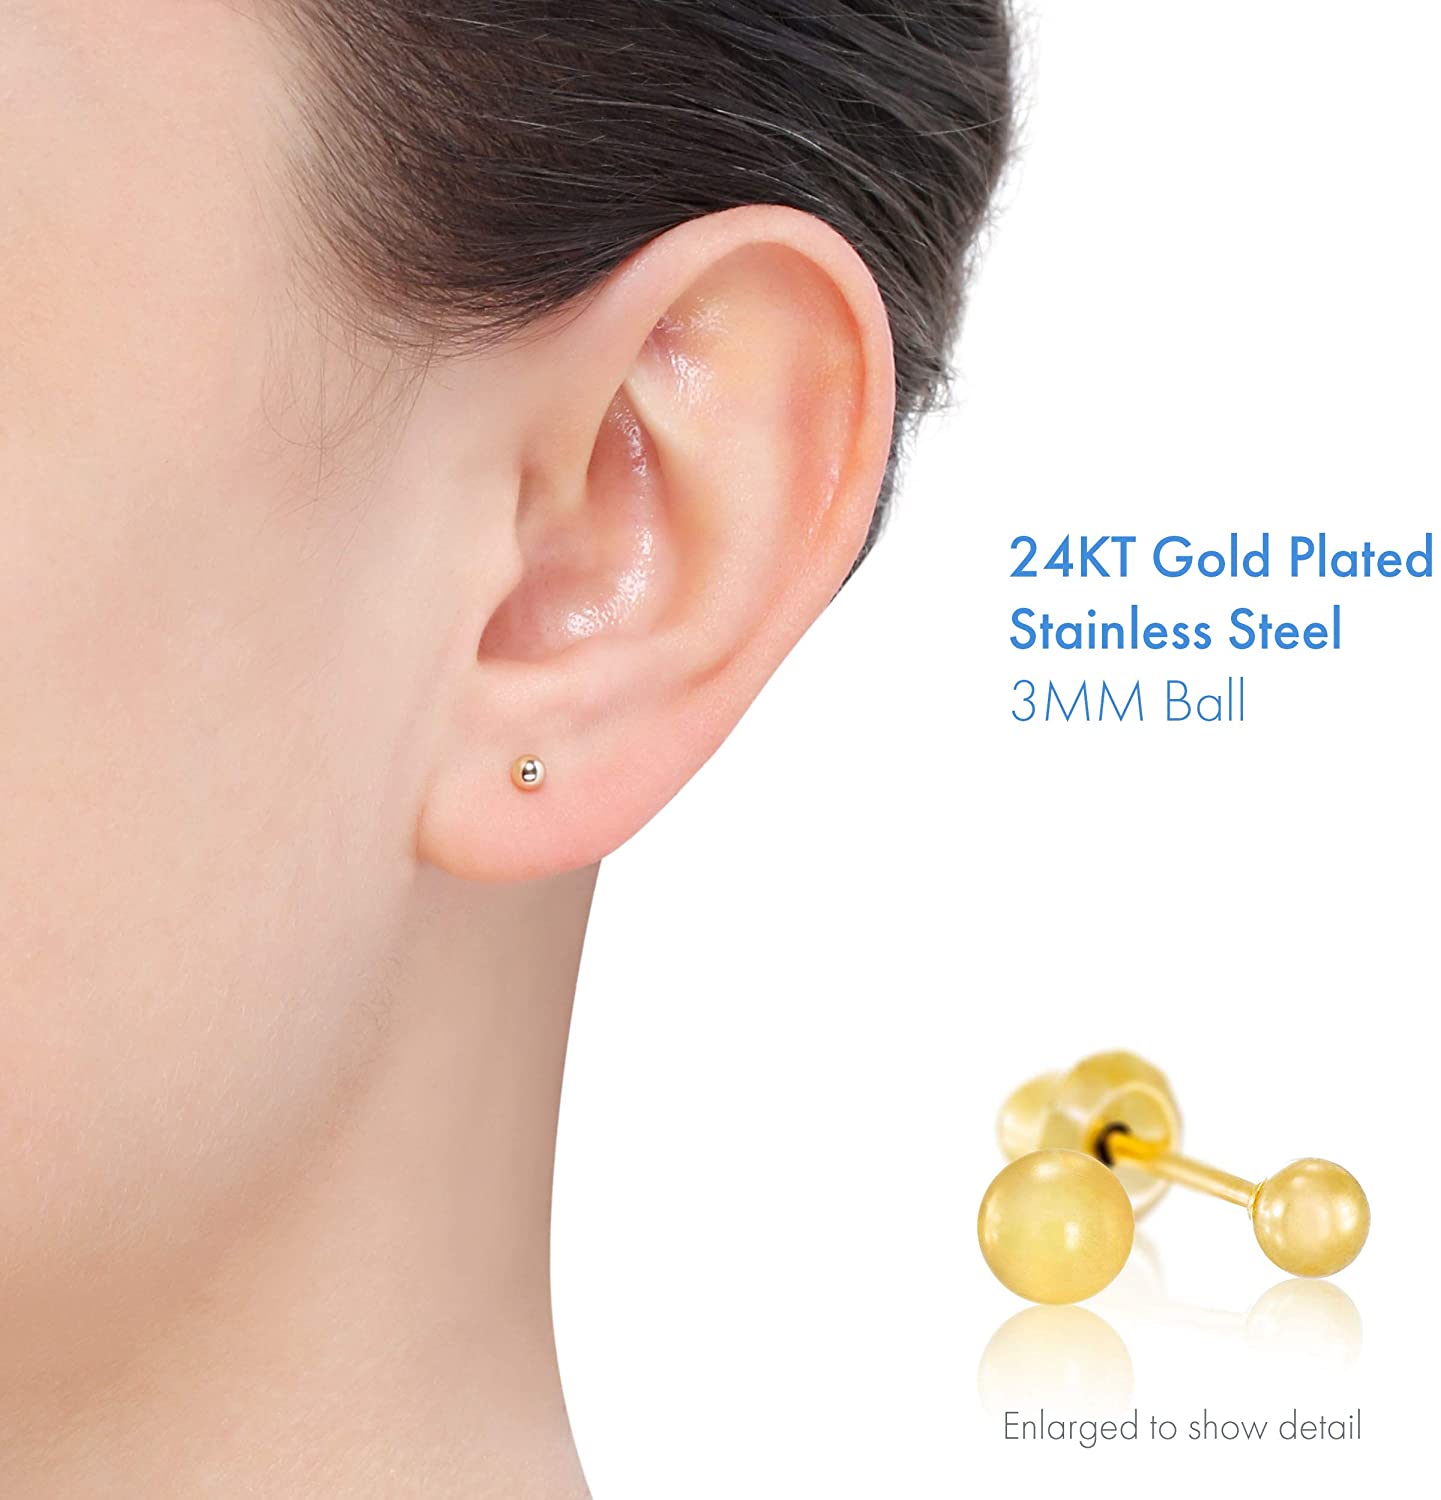 24ct Gold Plated Stainless Steel 3mm Ball Home Ear Piercing Kit Ear Piercing Rock Lobster Jewellery   